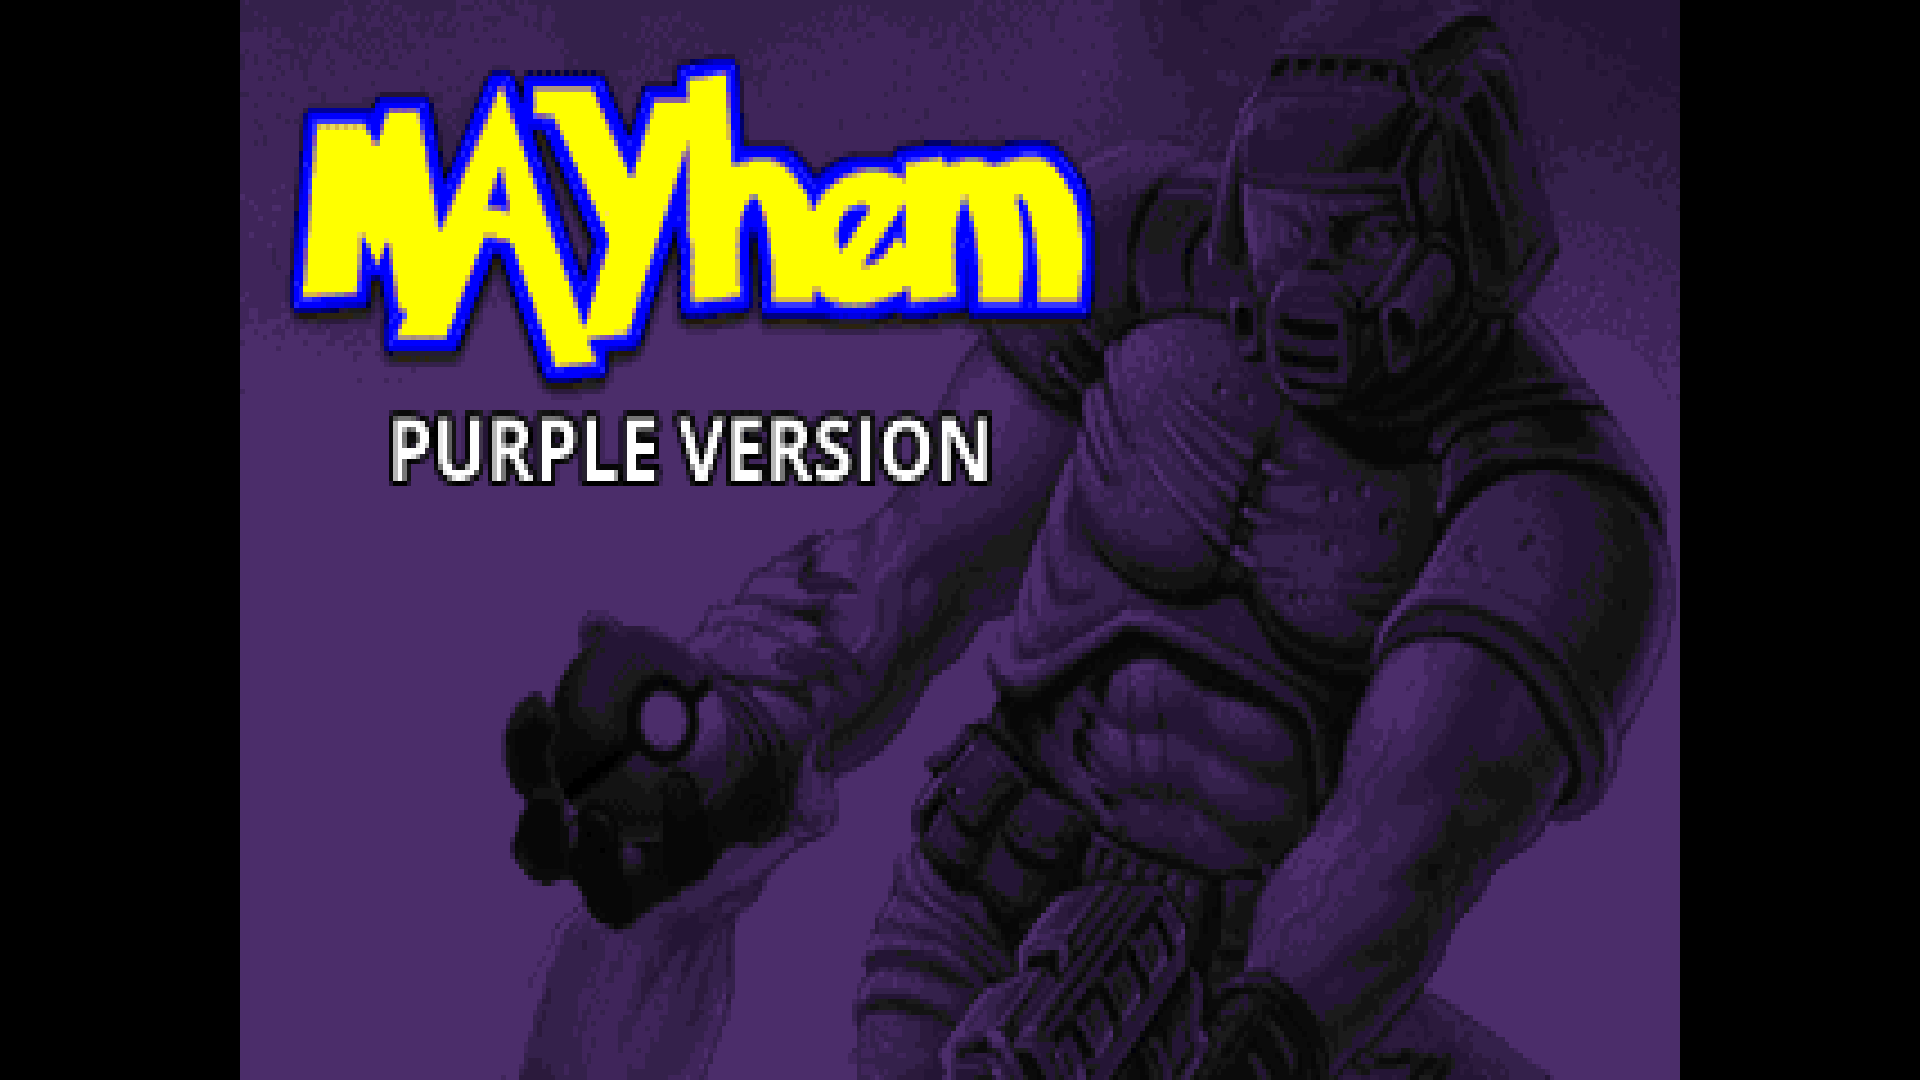 beyond_doom_mayhem18_purple